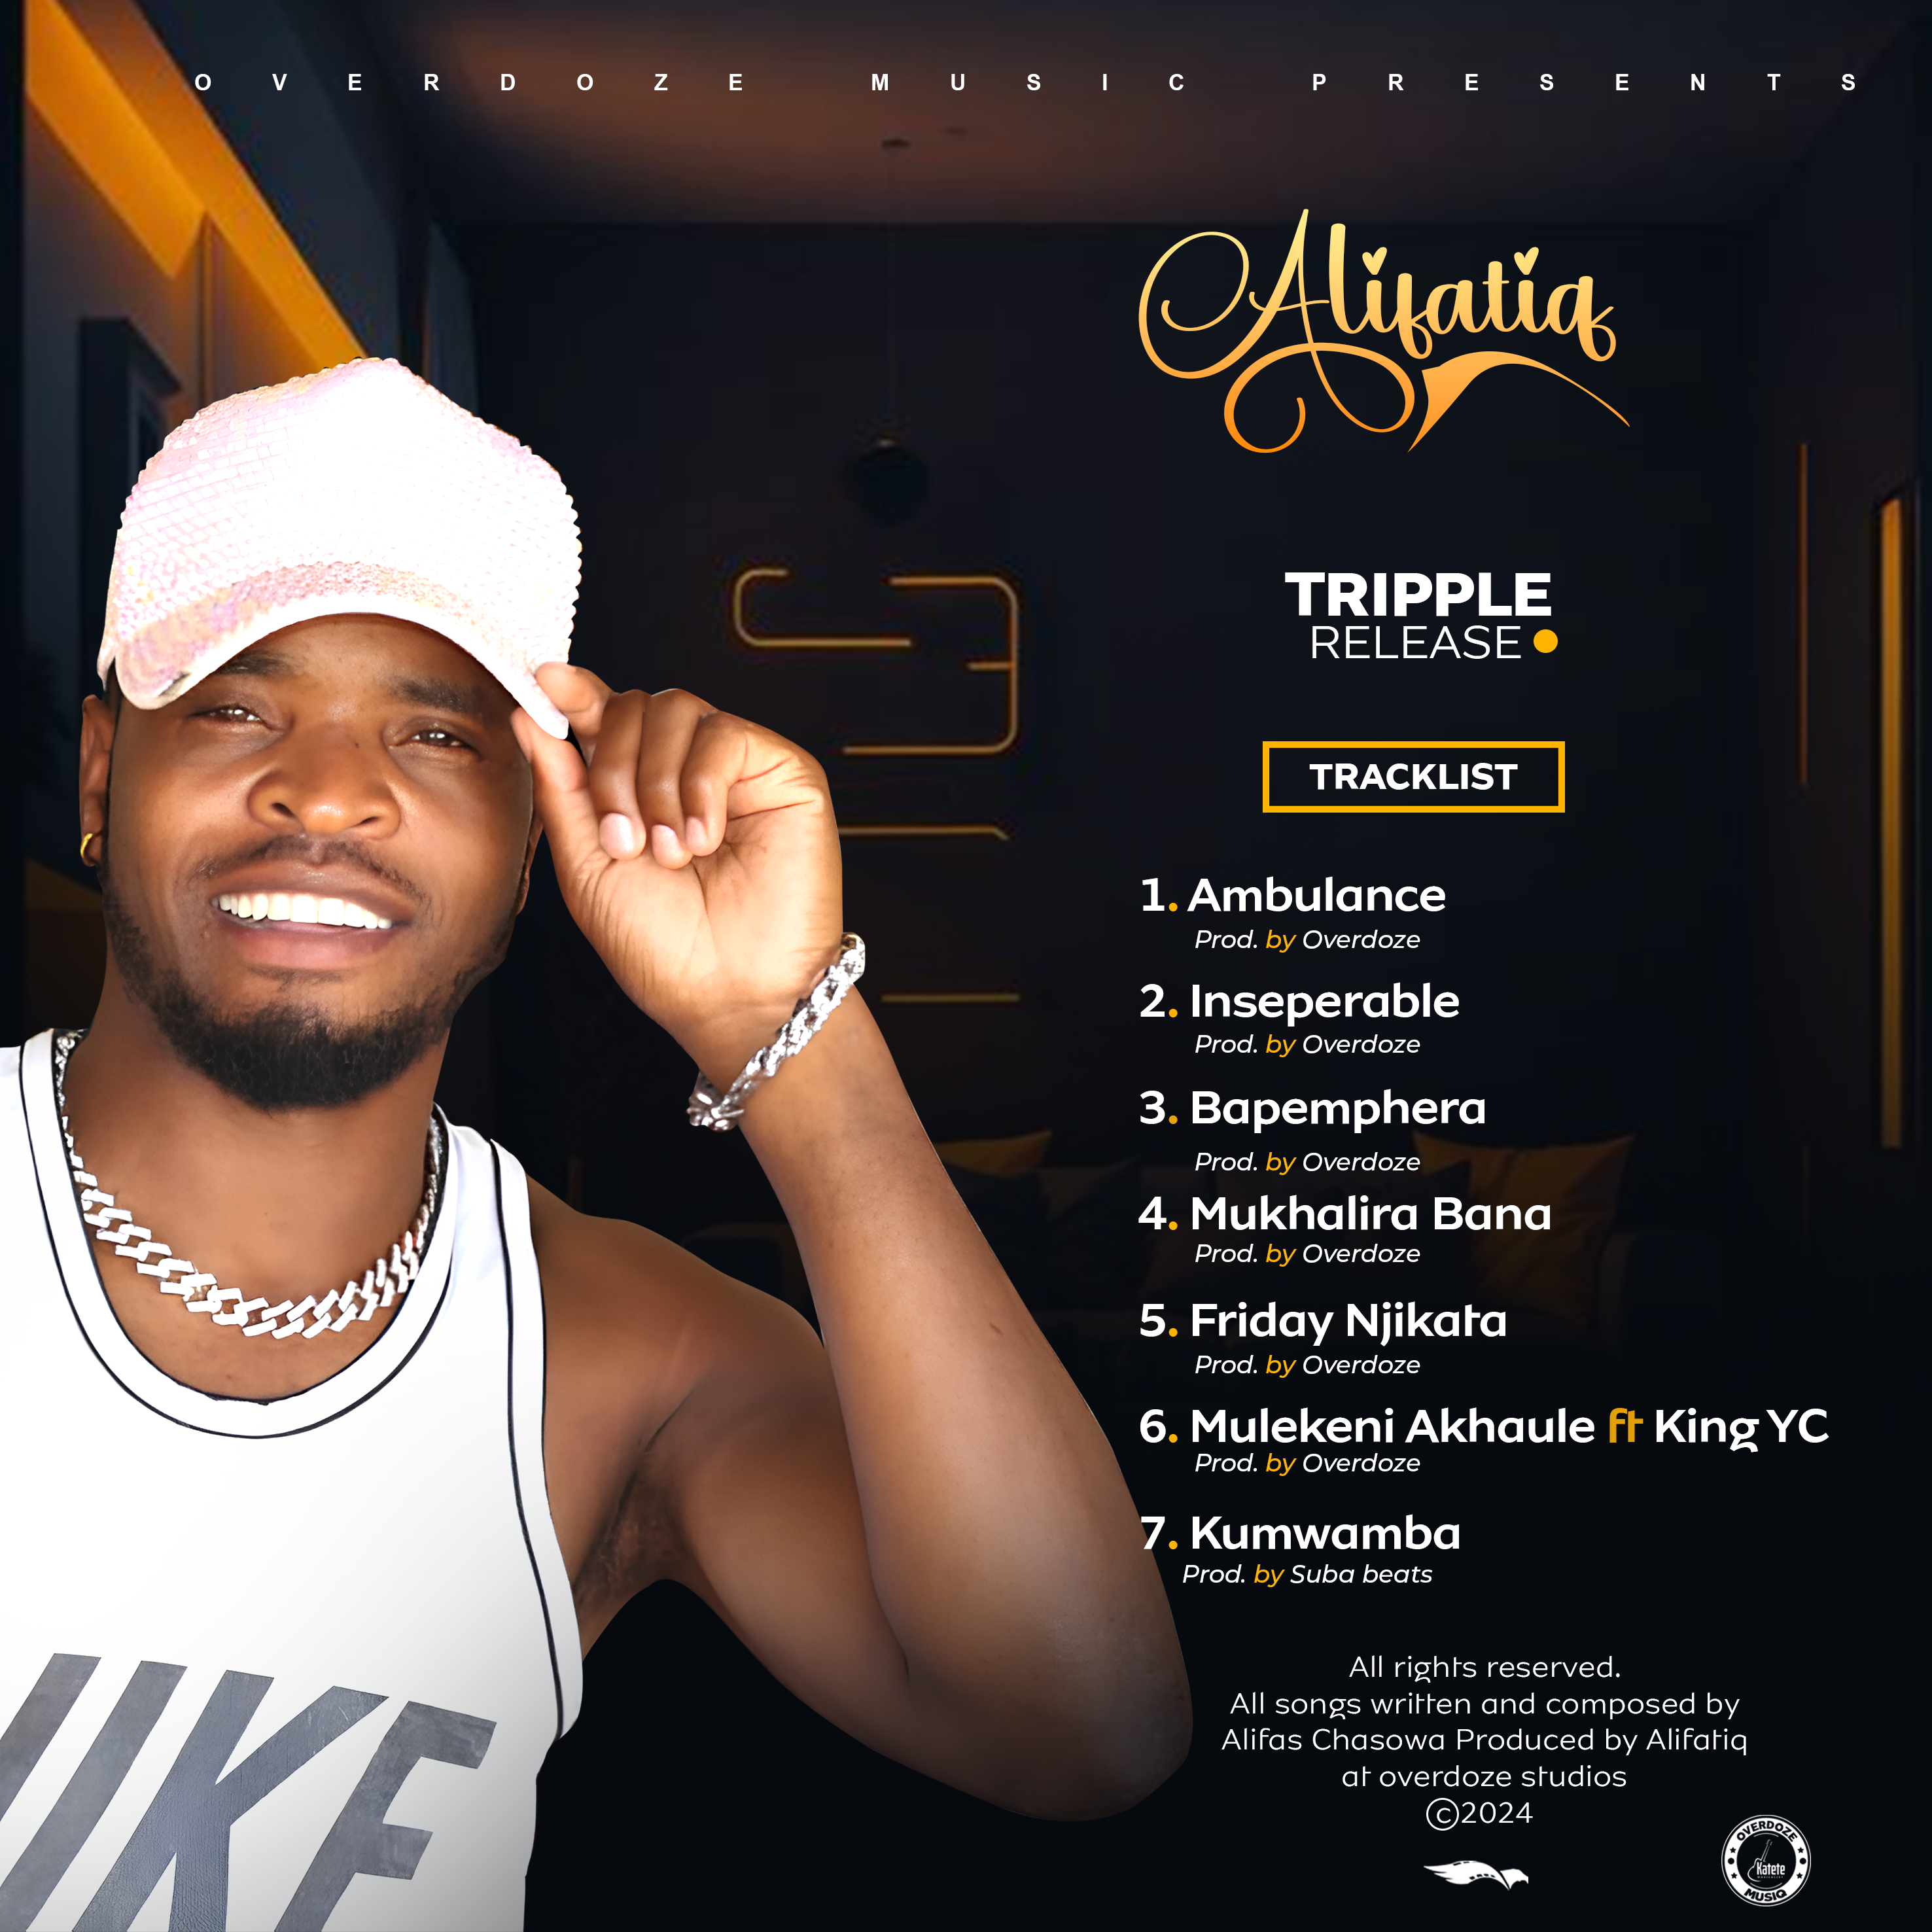 Tripple Release by Alifatiq | Album